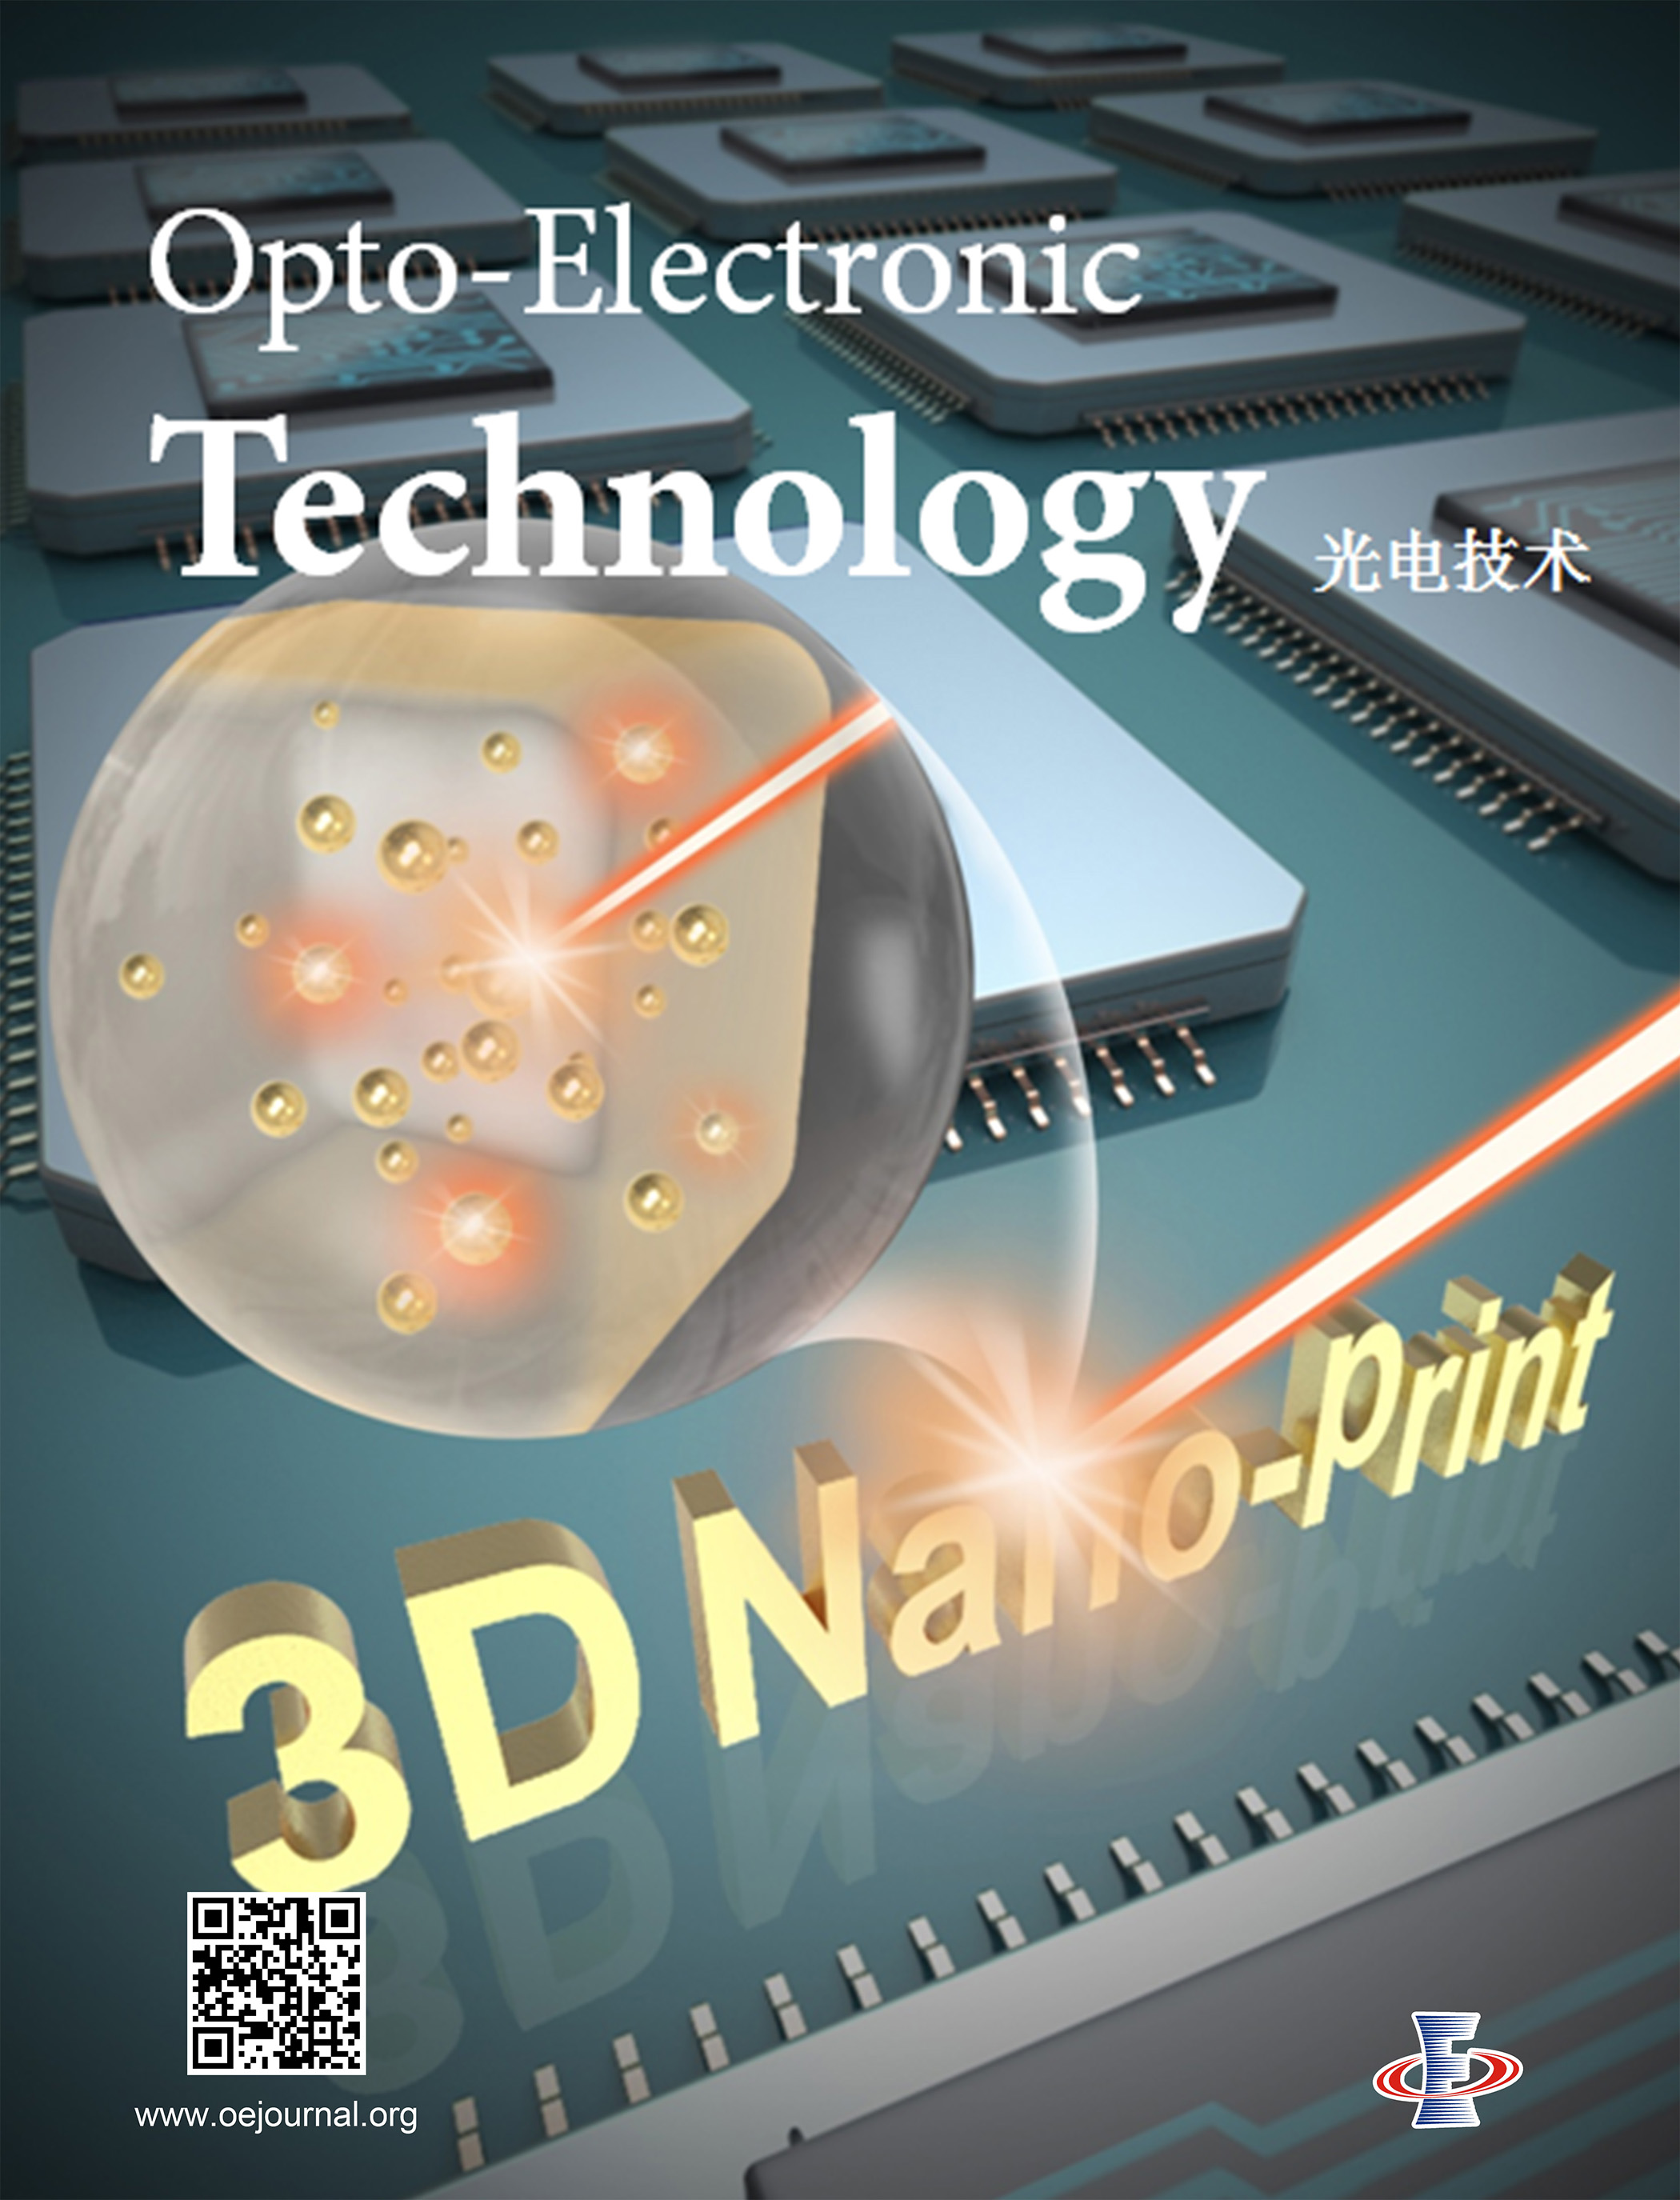 Opto-Electronic Technology